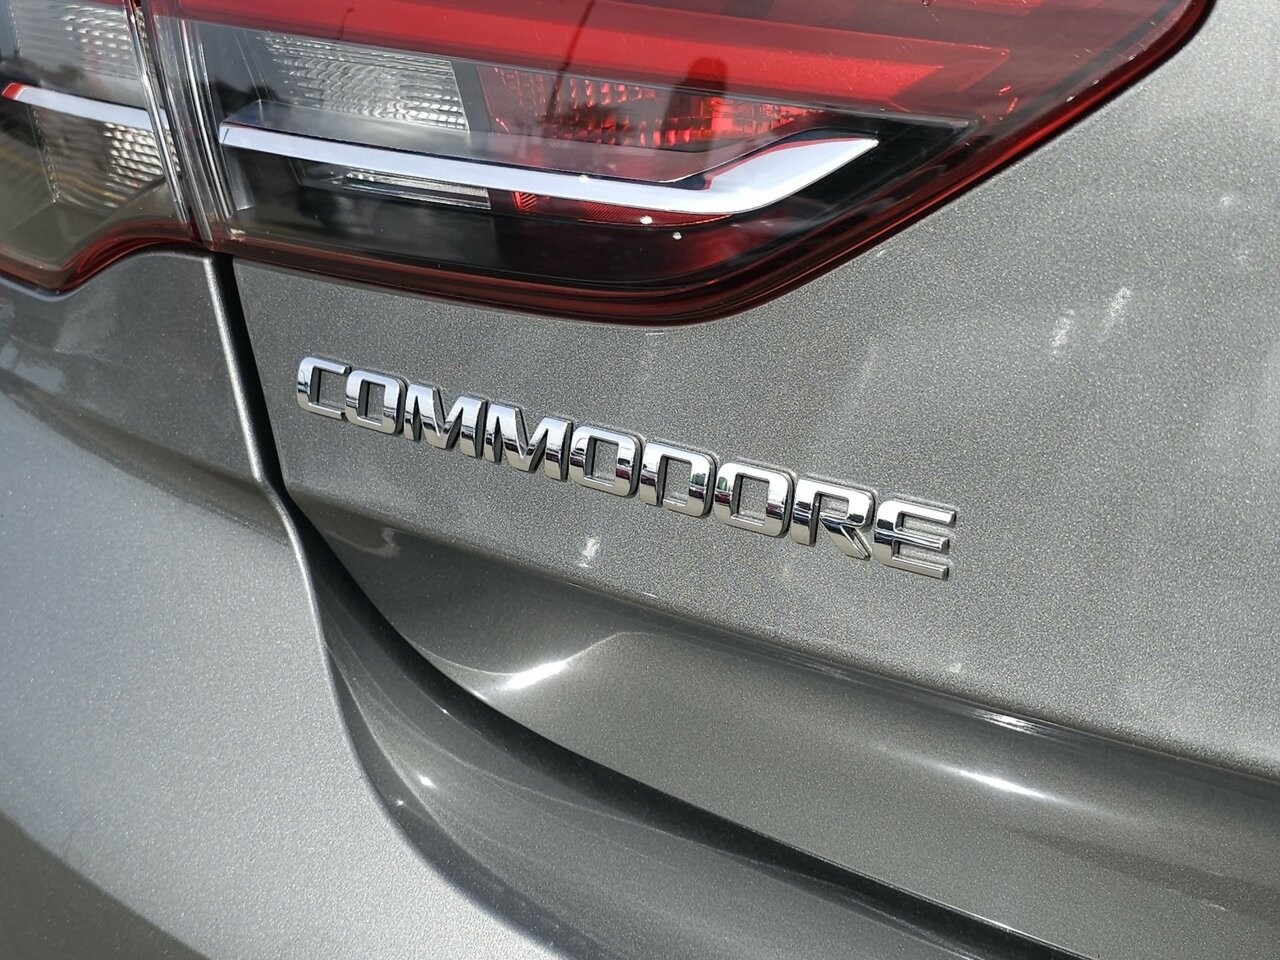 Holden Commodore image 3